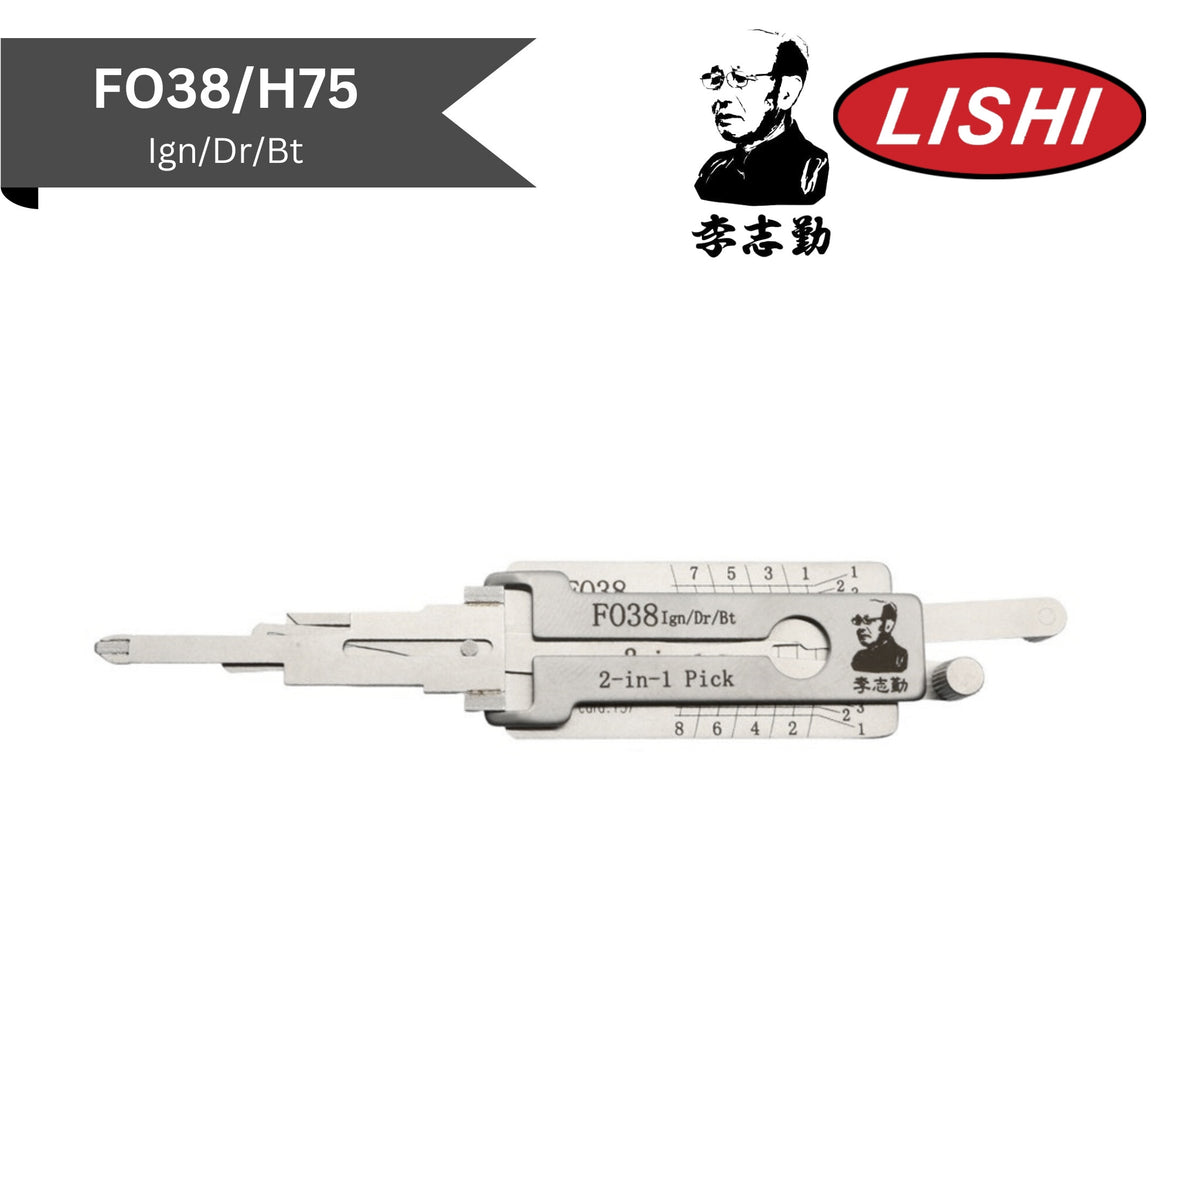 Original Lishi - Ford FO38 - 2-in-1 Pick/Decoder - AG